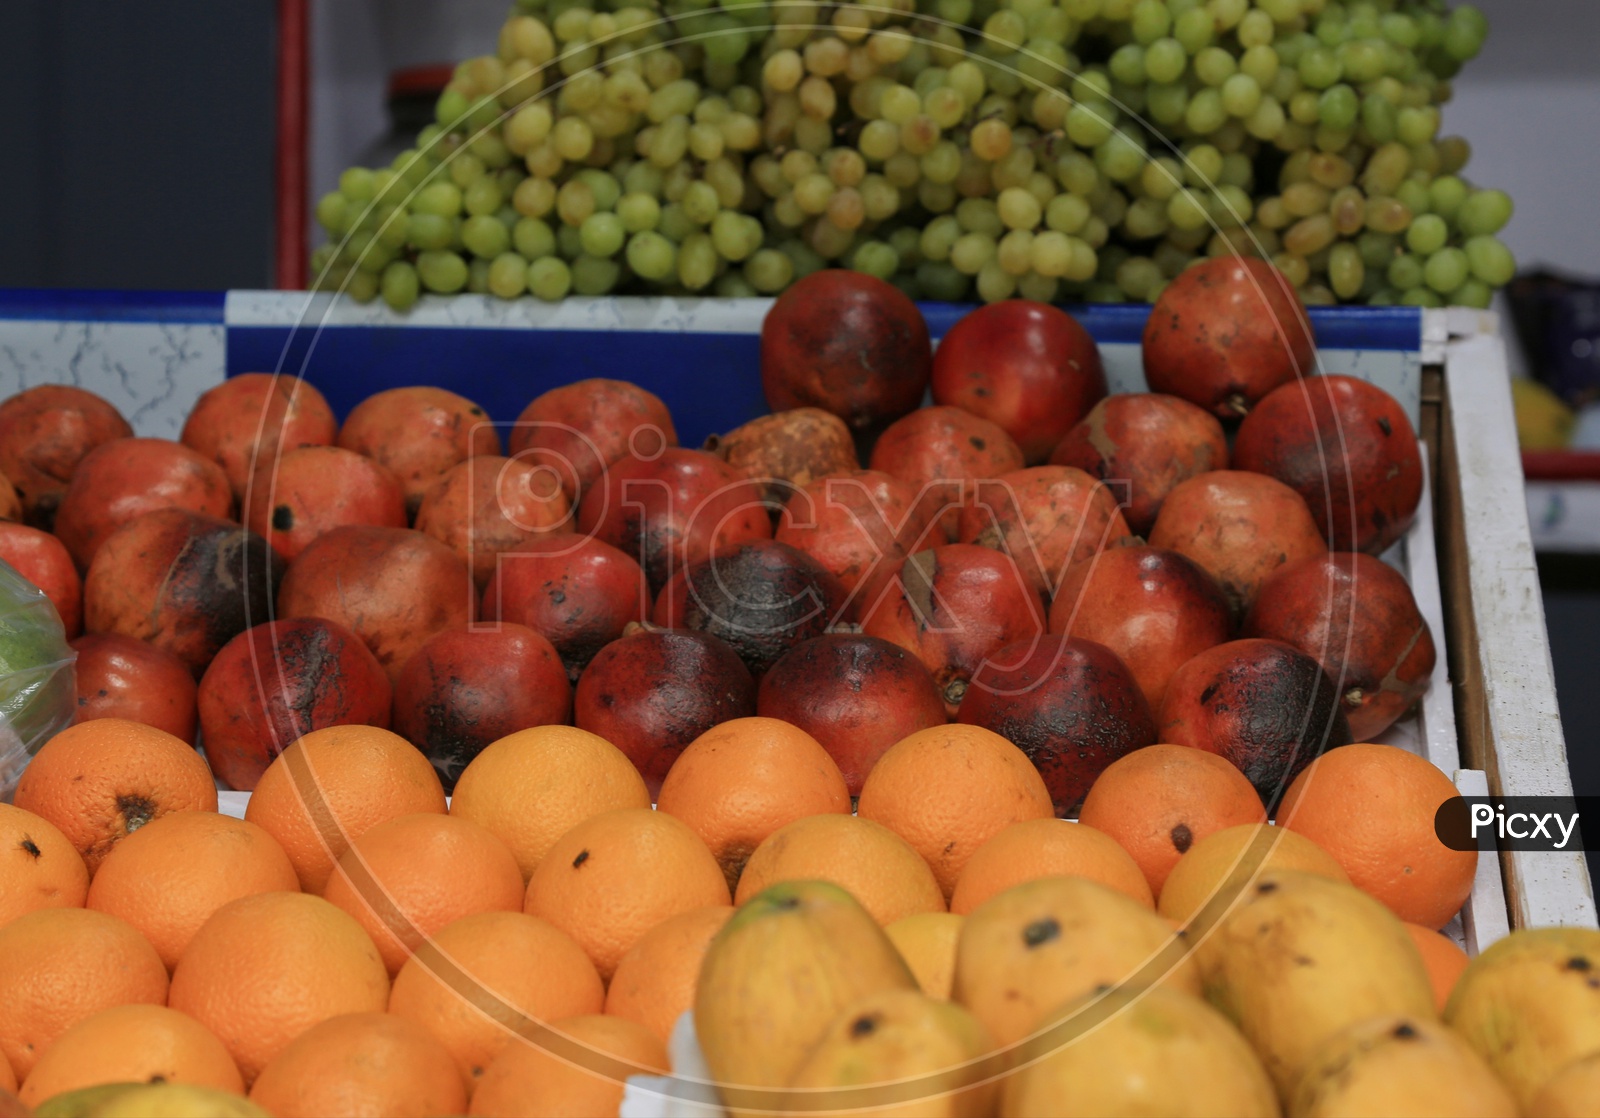 Whole sale fruit market in Dibrugarh